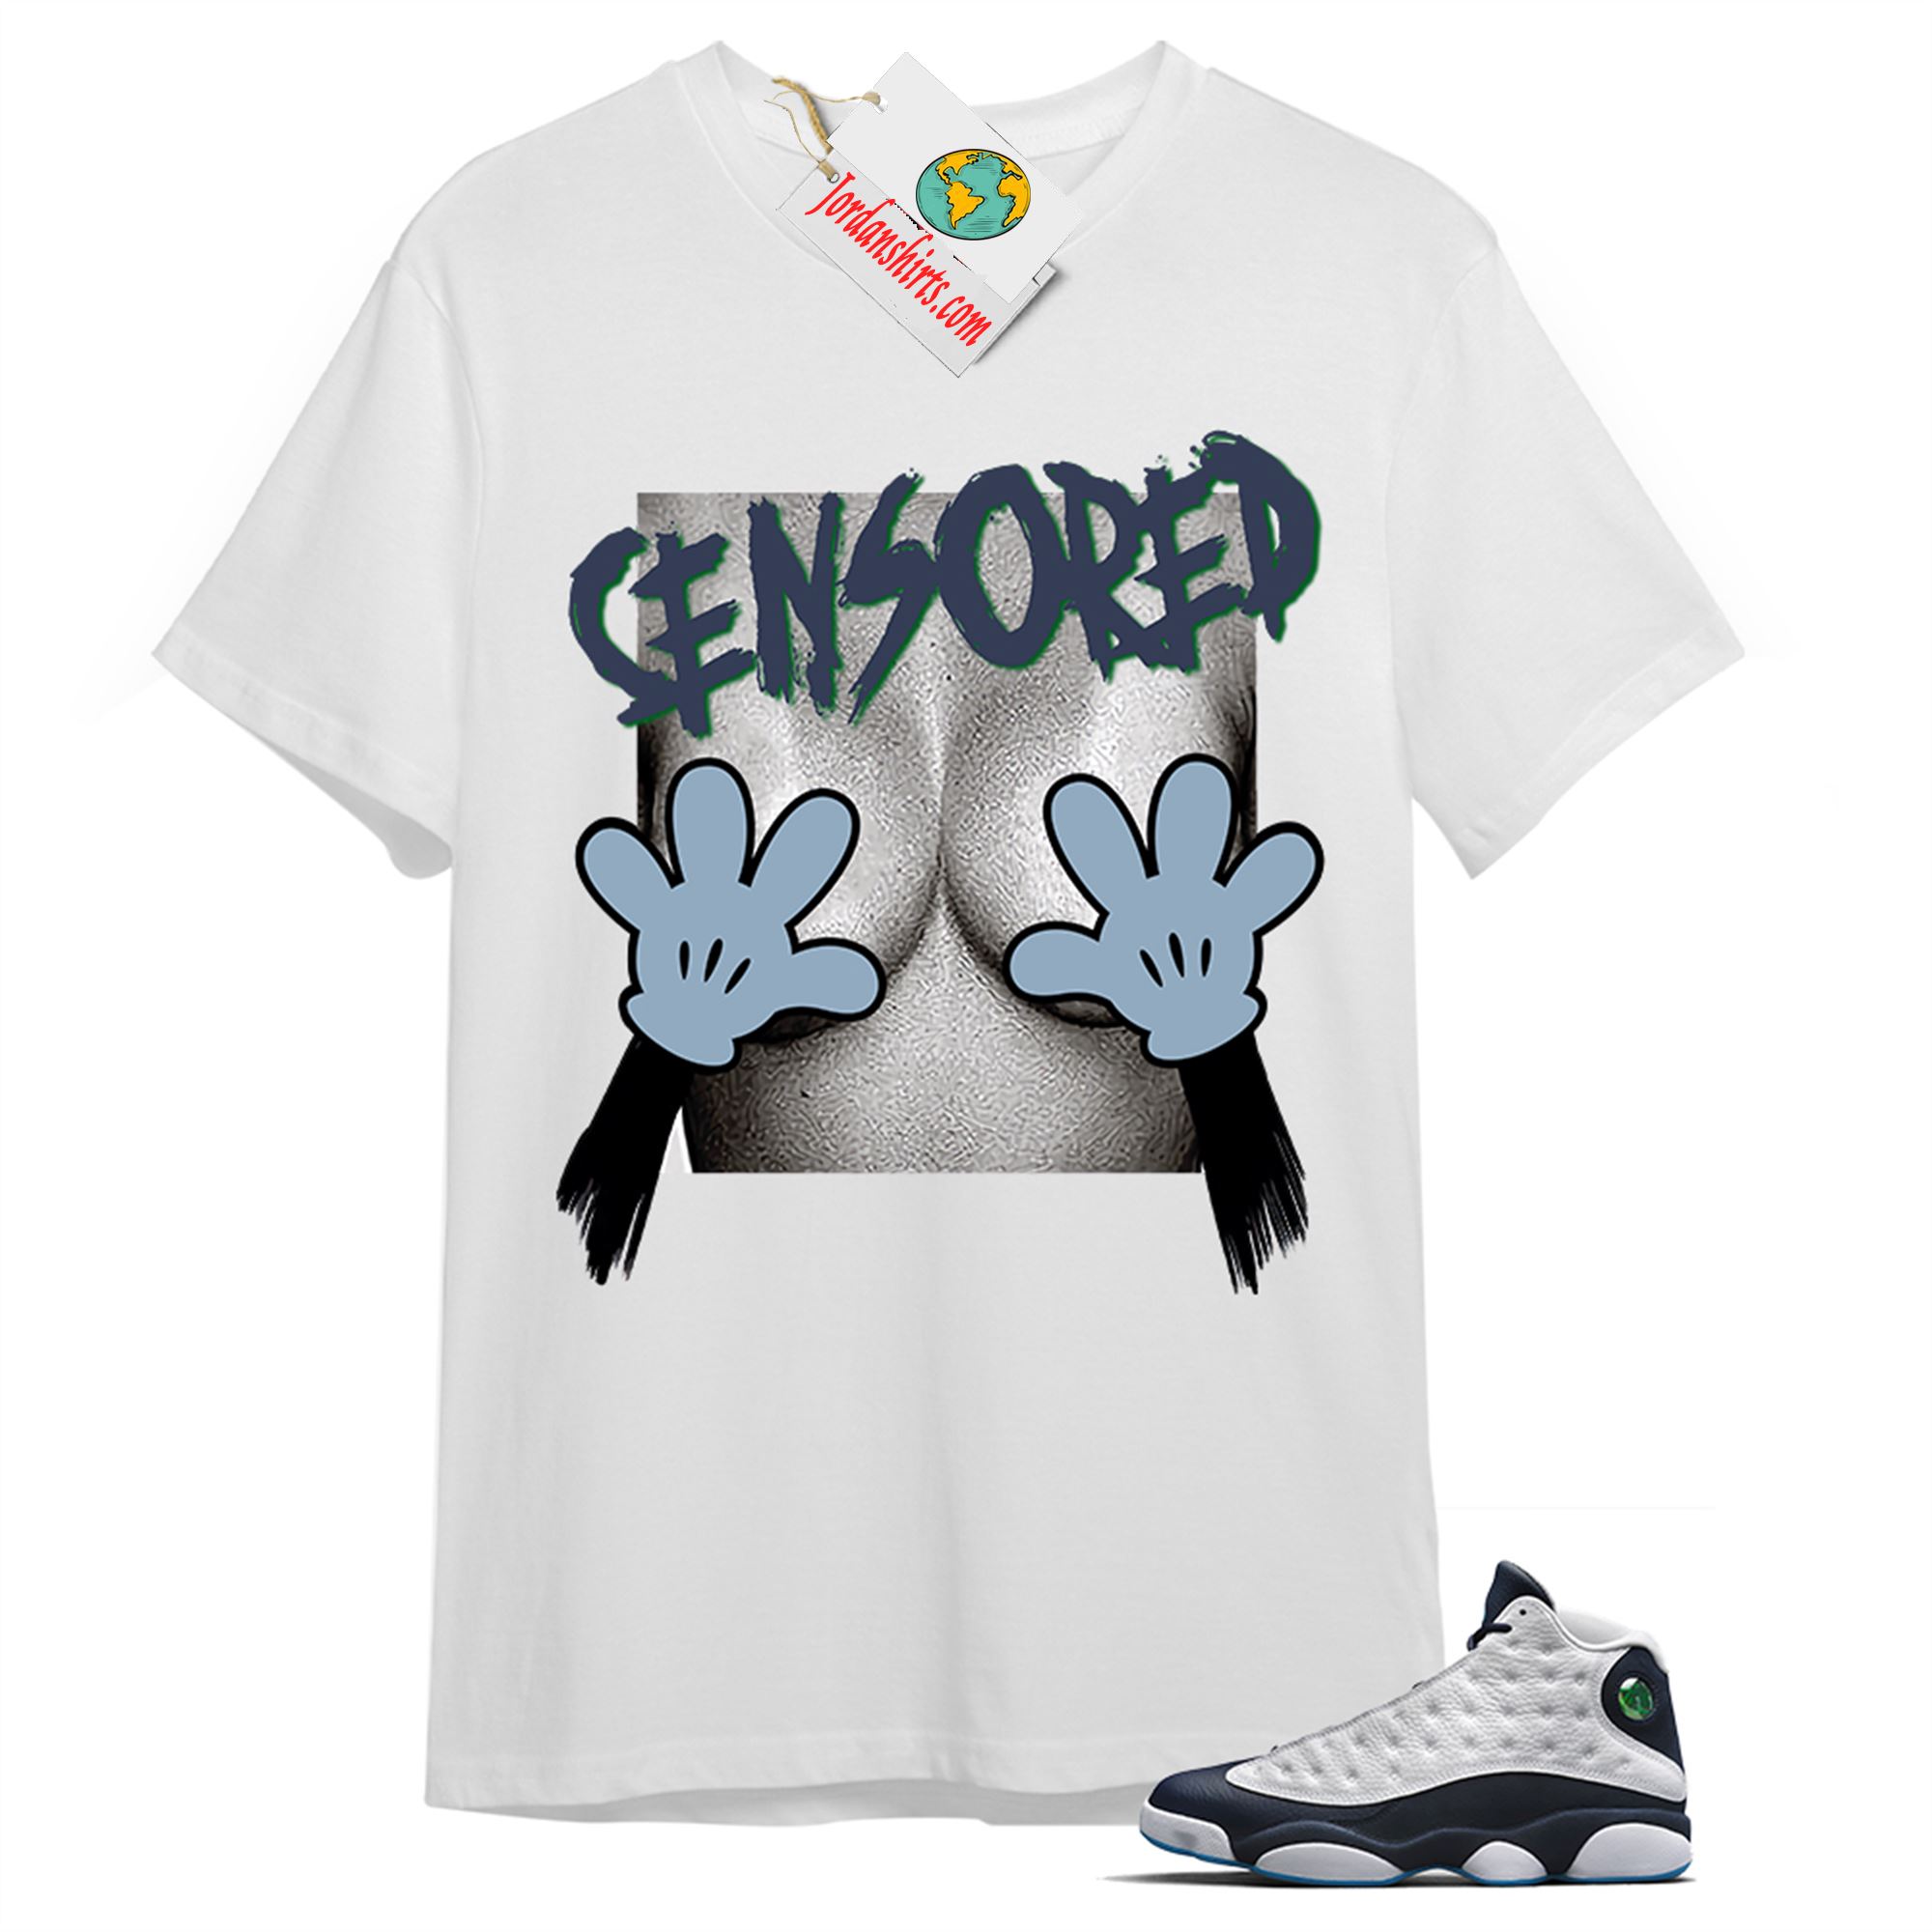 Jordan 13 Shirt, Mickey Boobs Censored White T-shirt Air Jordan 13 Obsidian 13s Plus Size Up To 5xl